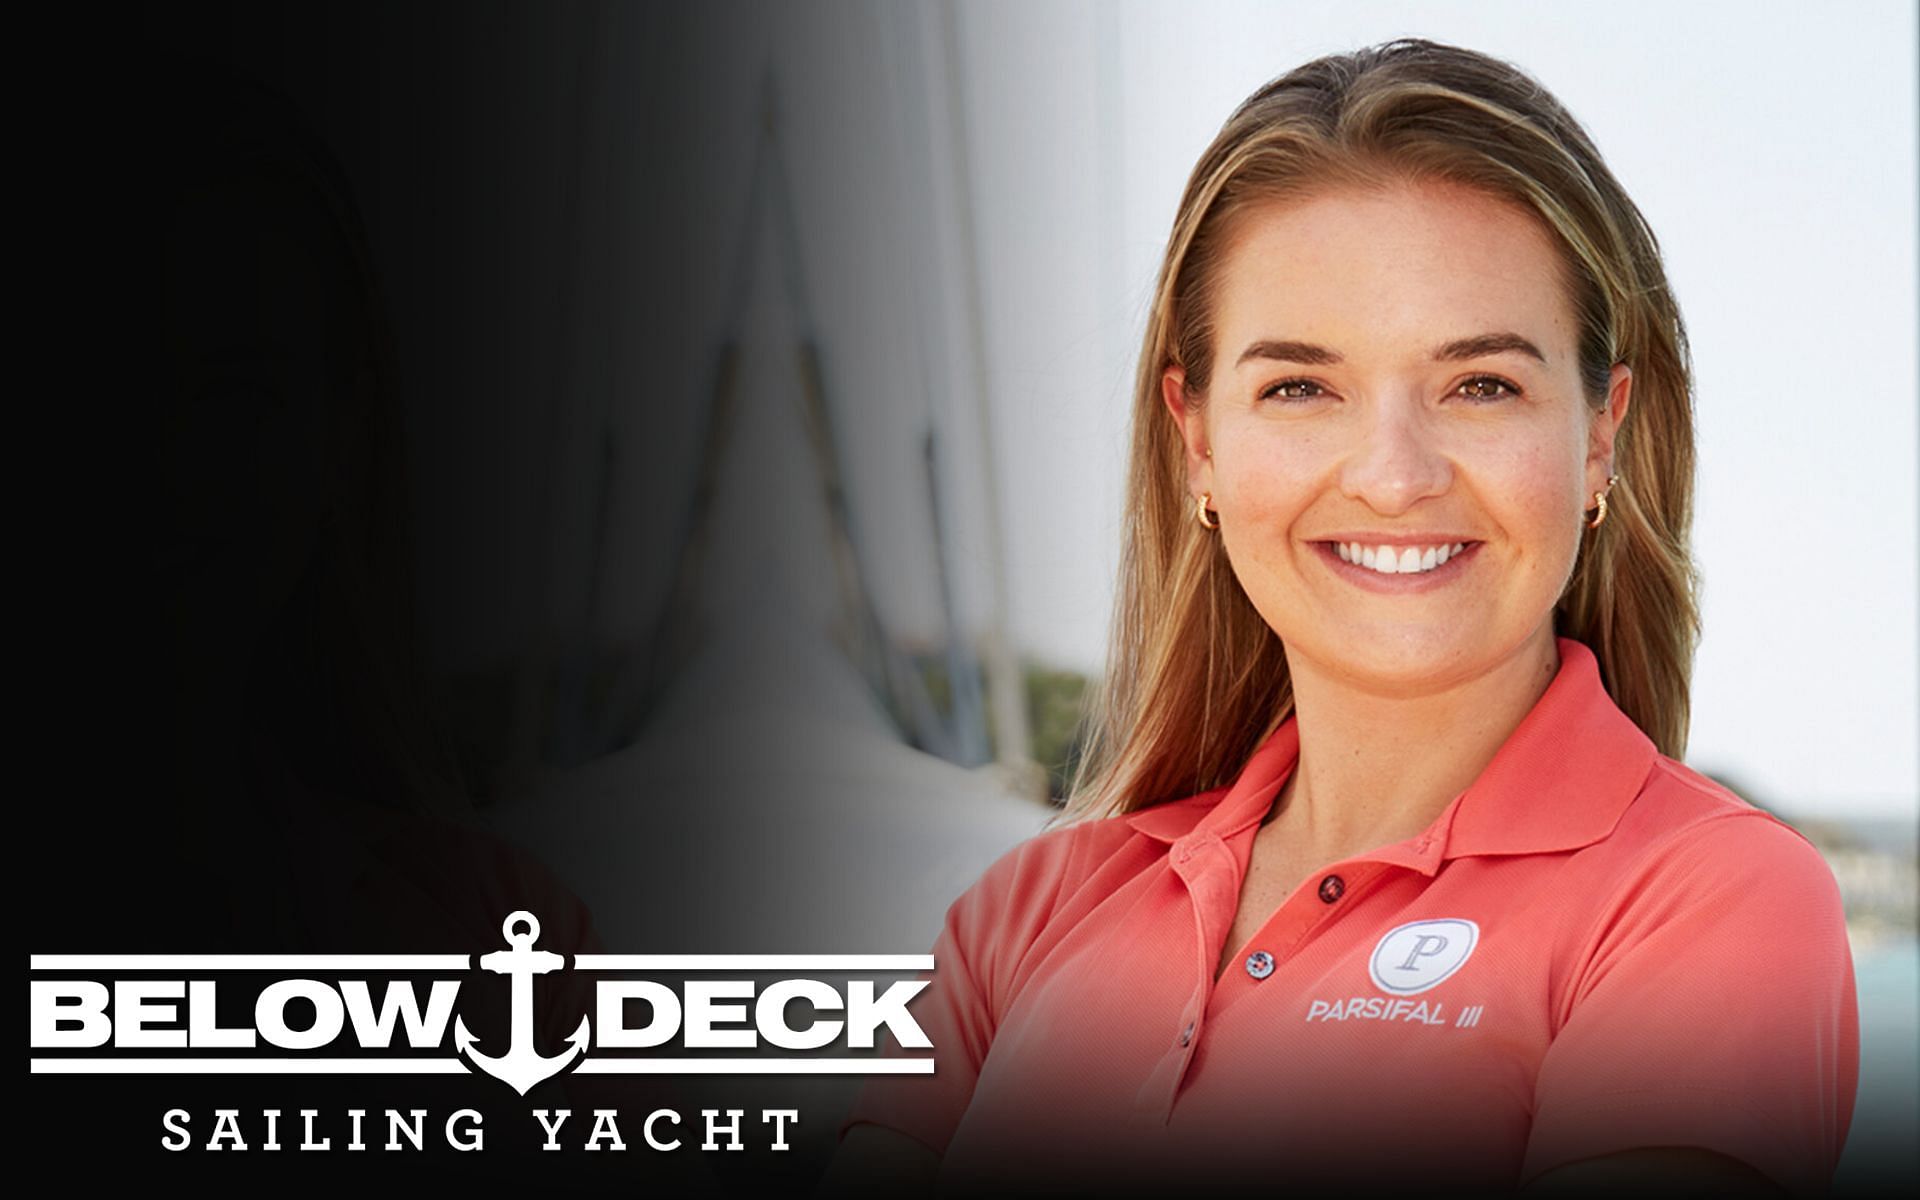 Daisy Kelliher from Below Deck Sailing Yacht (Image via bravotv.com)